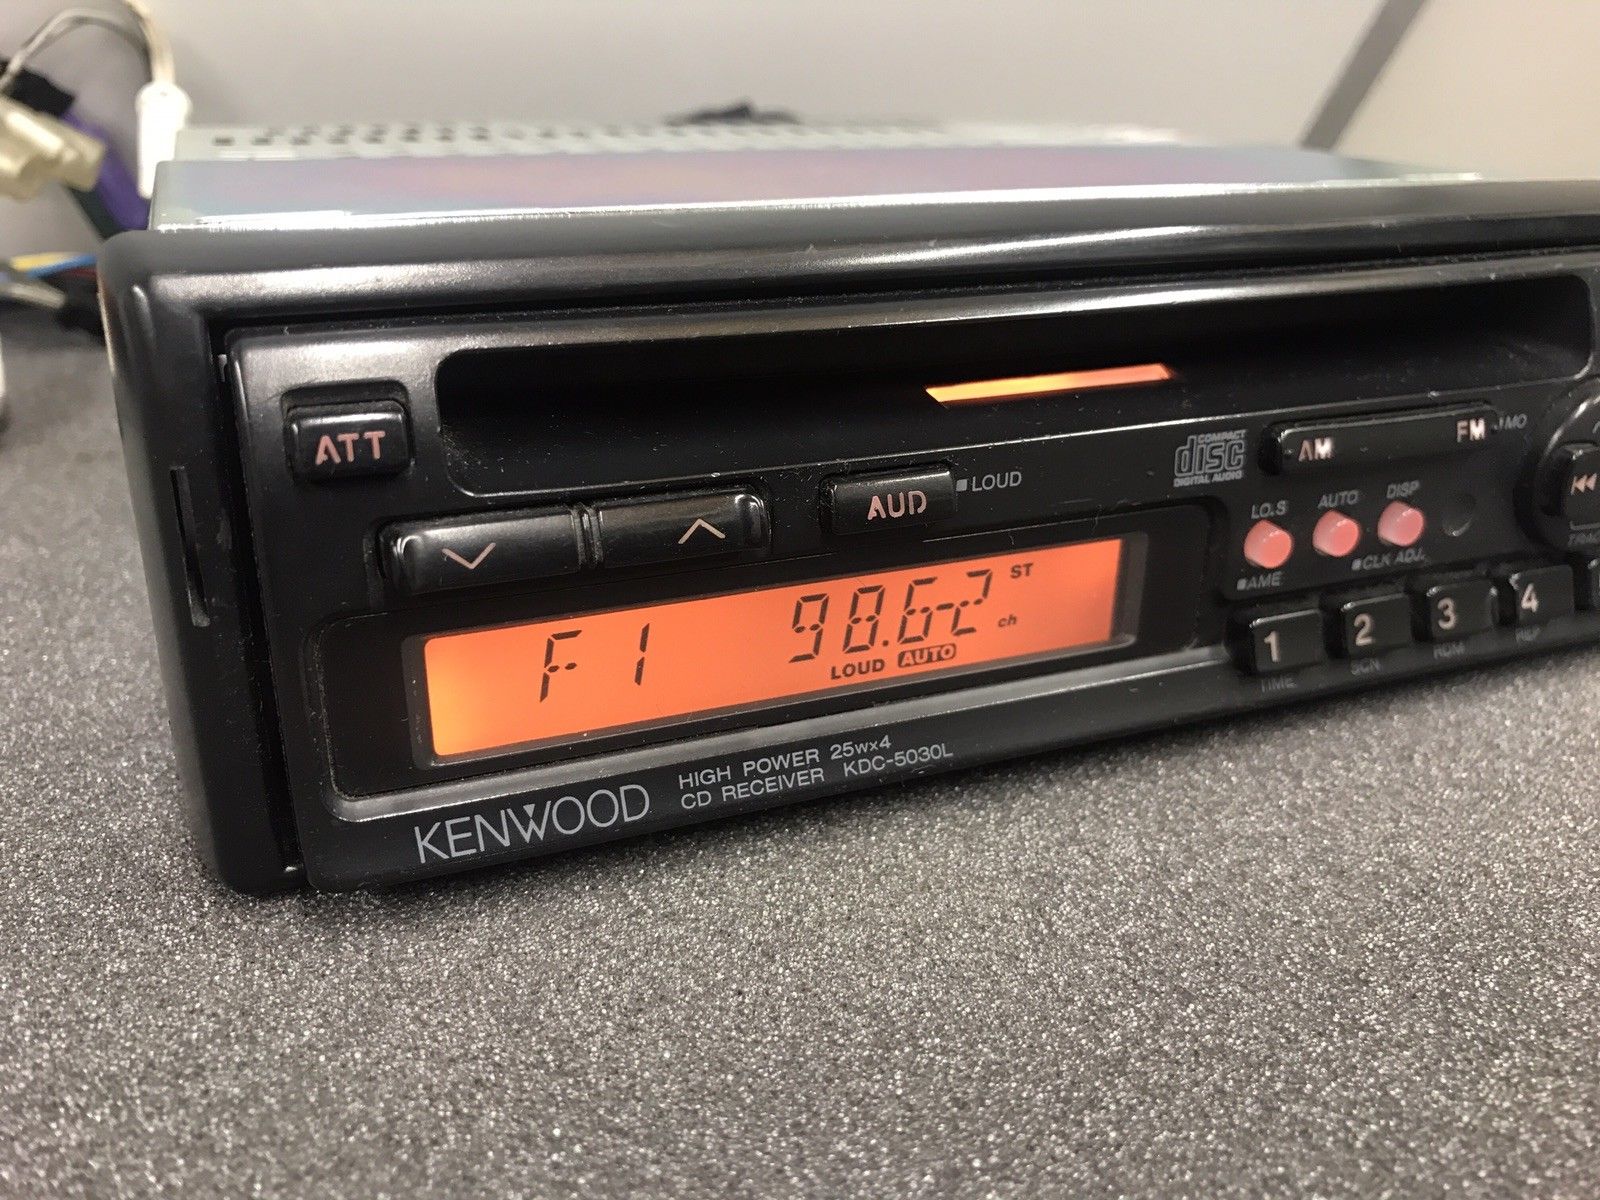 Old Kenwood Car Radio Stereo Cd Player Model Kdc-5030L Retro 90s Vintage Retro